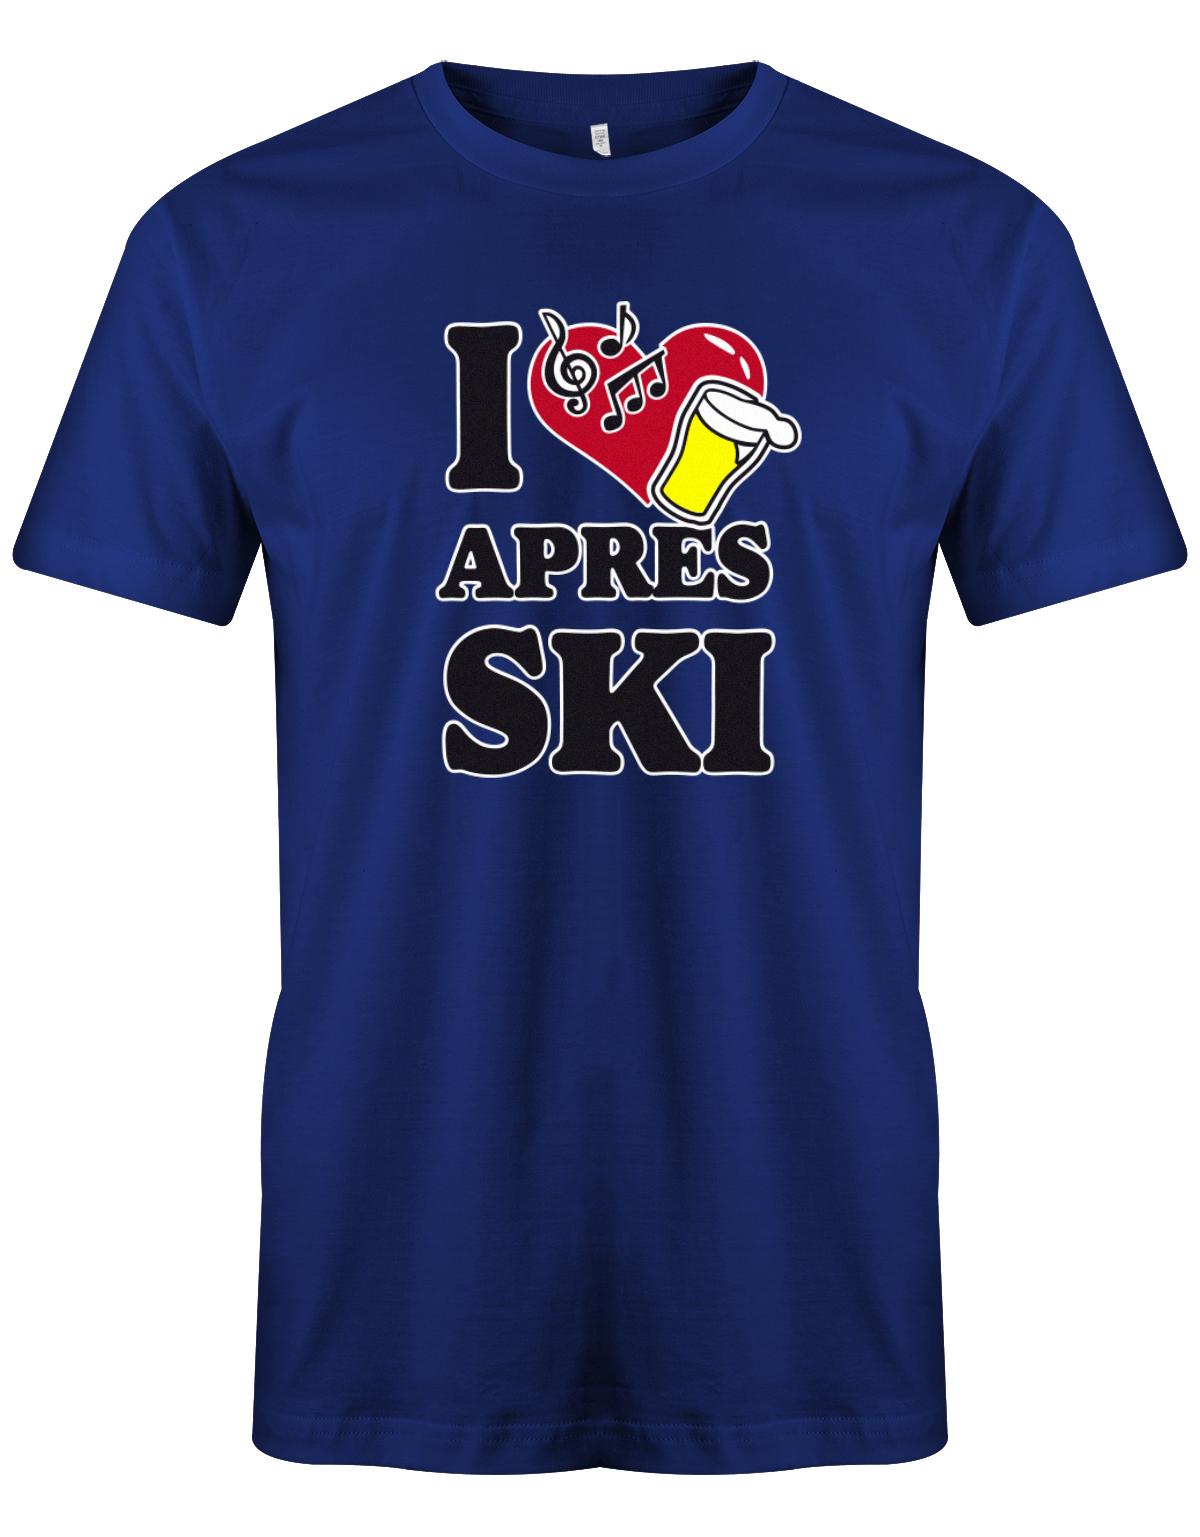 I-love-Apres-Ski-Herren-Shirt-Royalblau